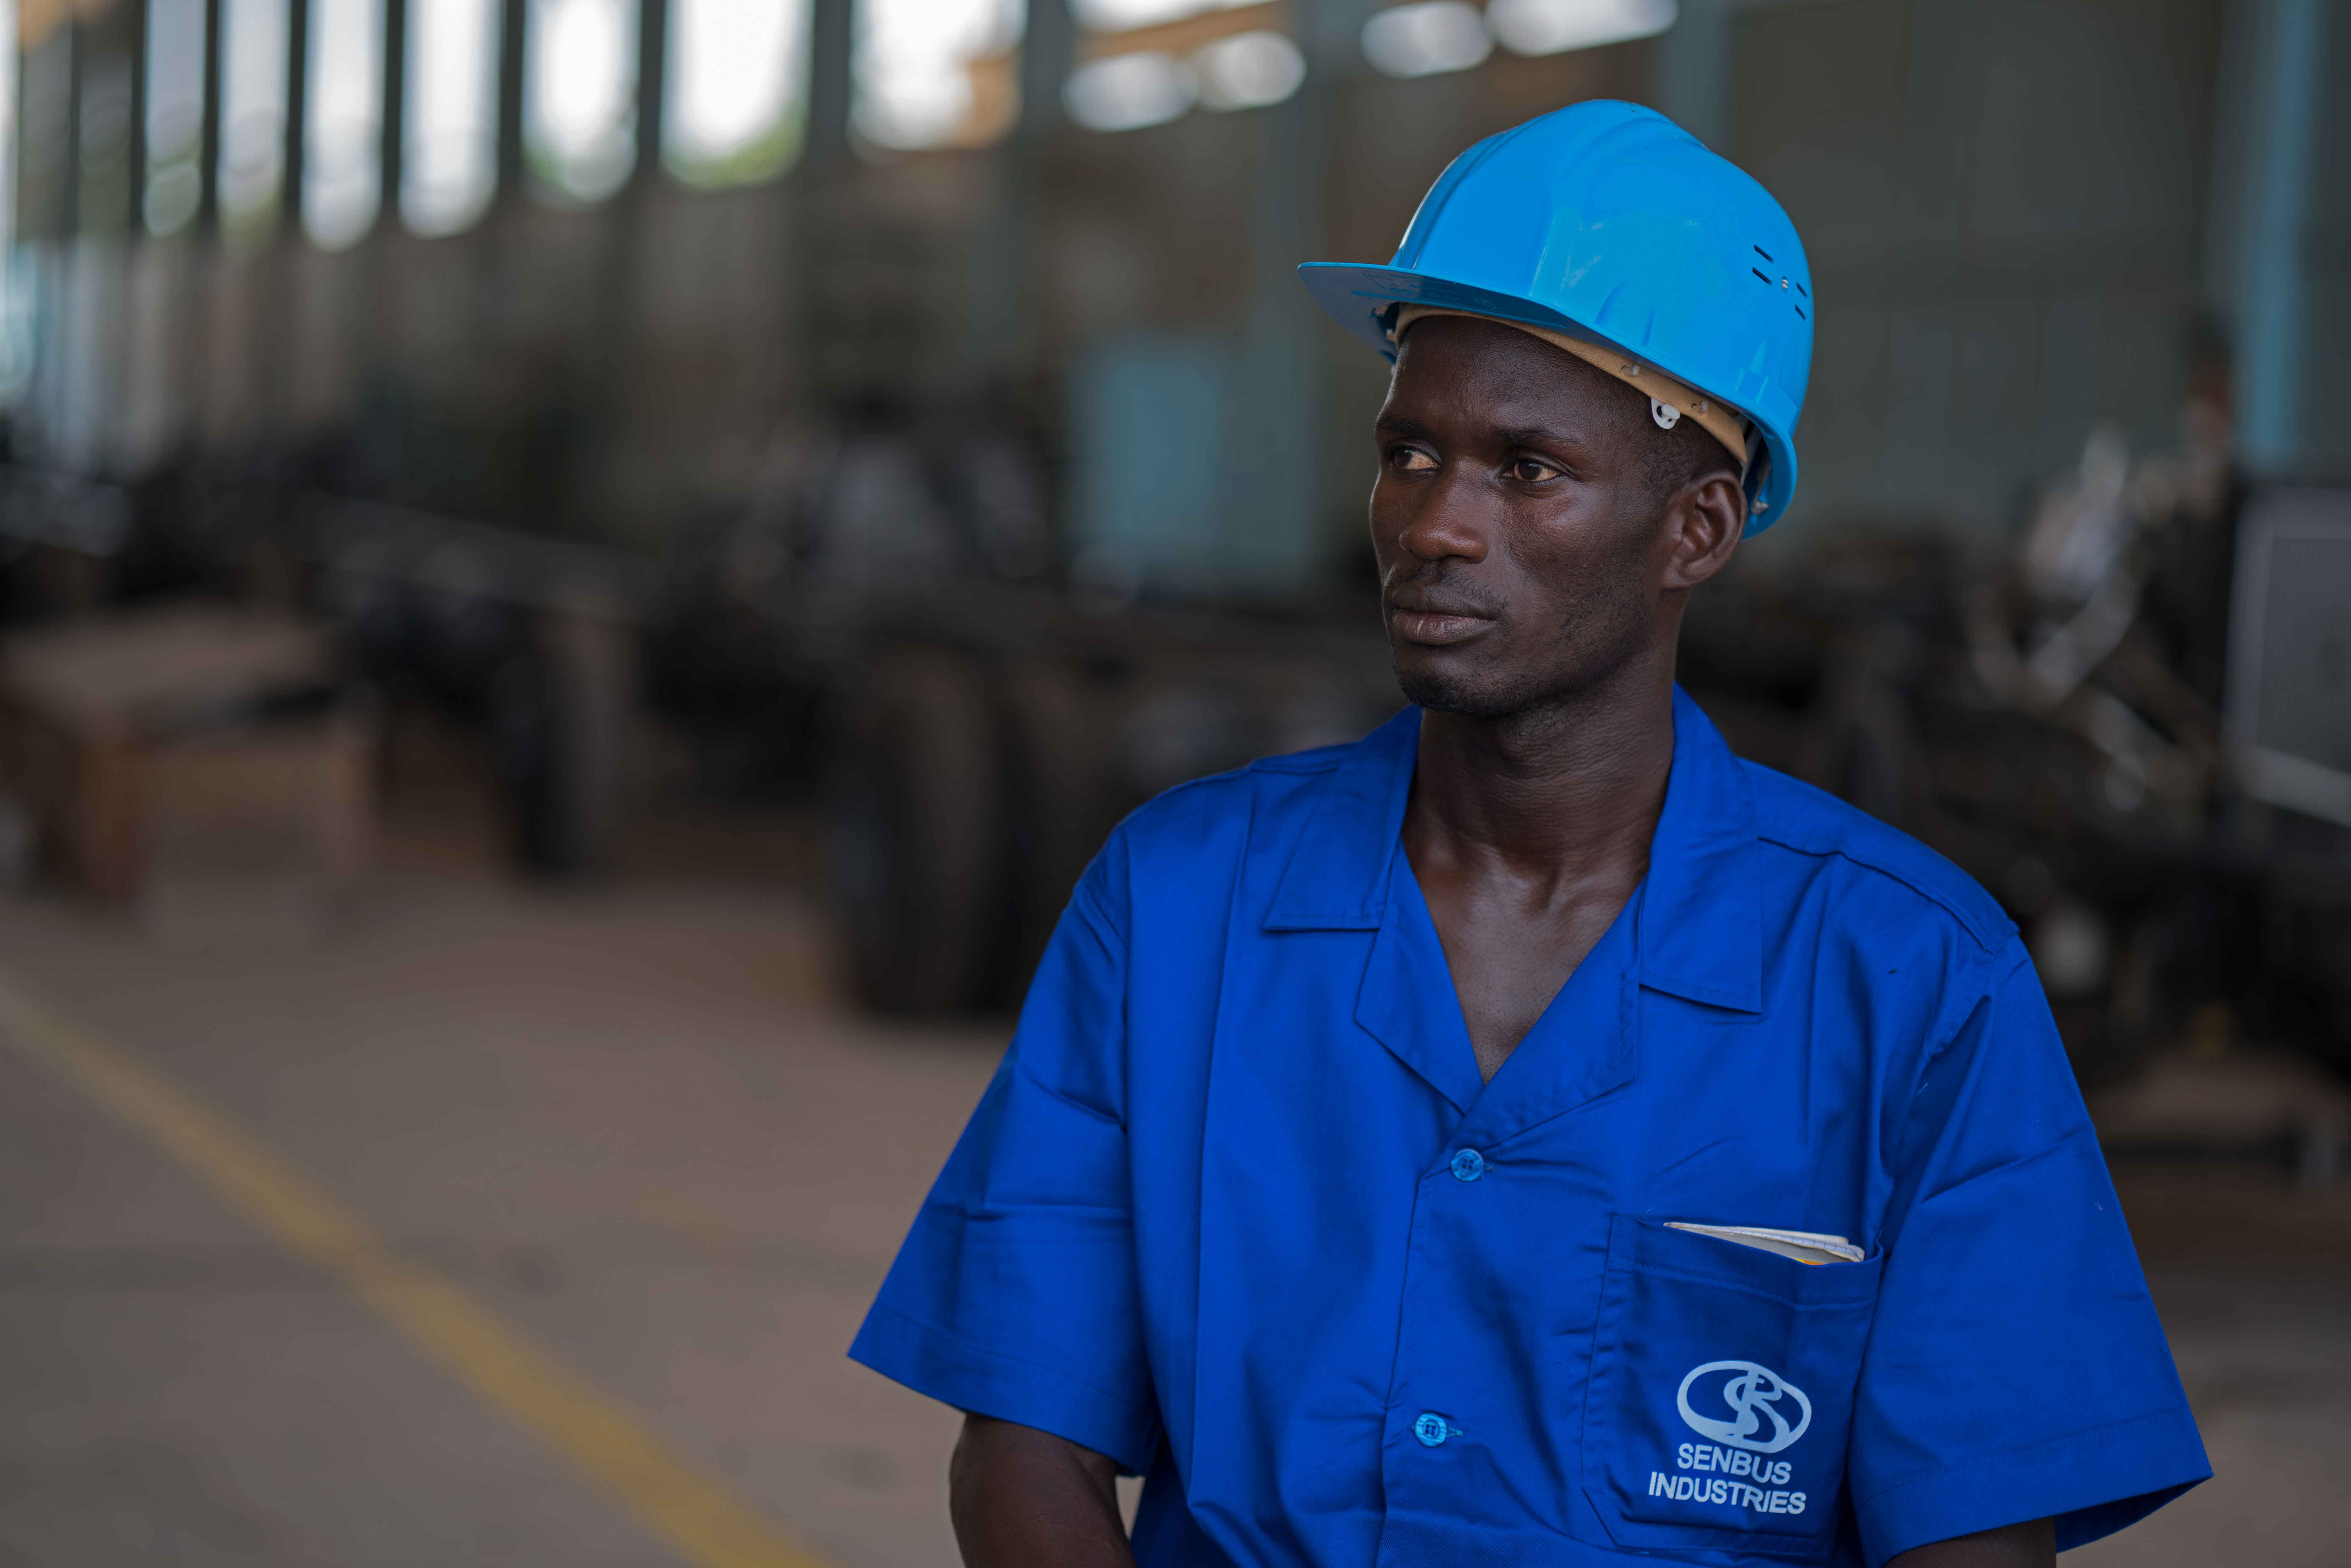 Pape Mbodji, a foreman at the Senbus factory in Senegal